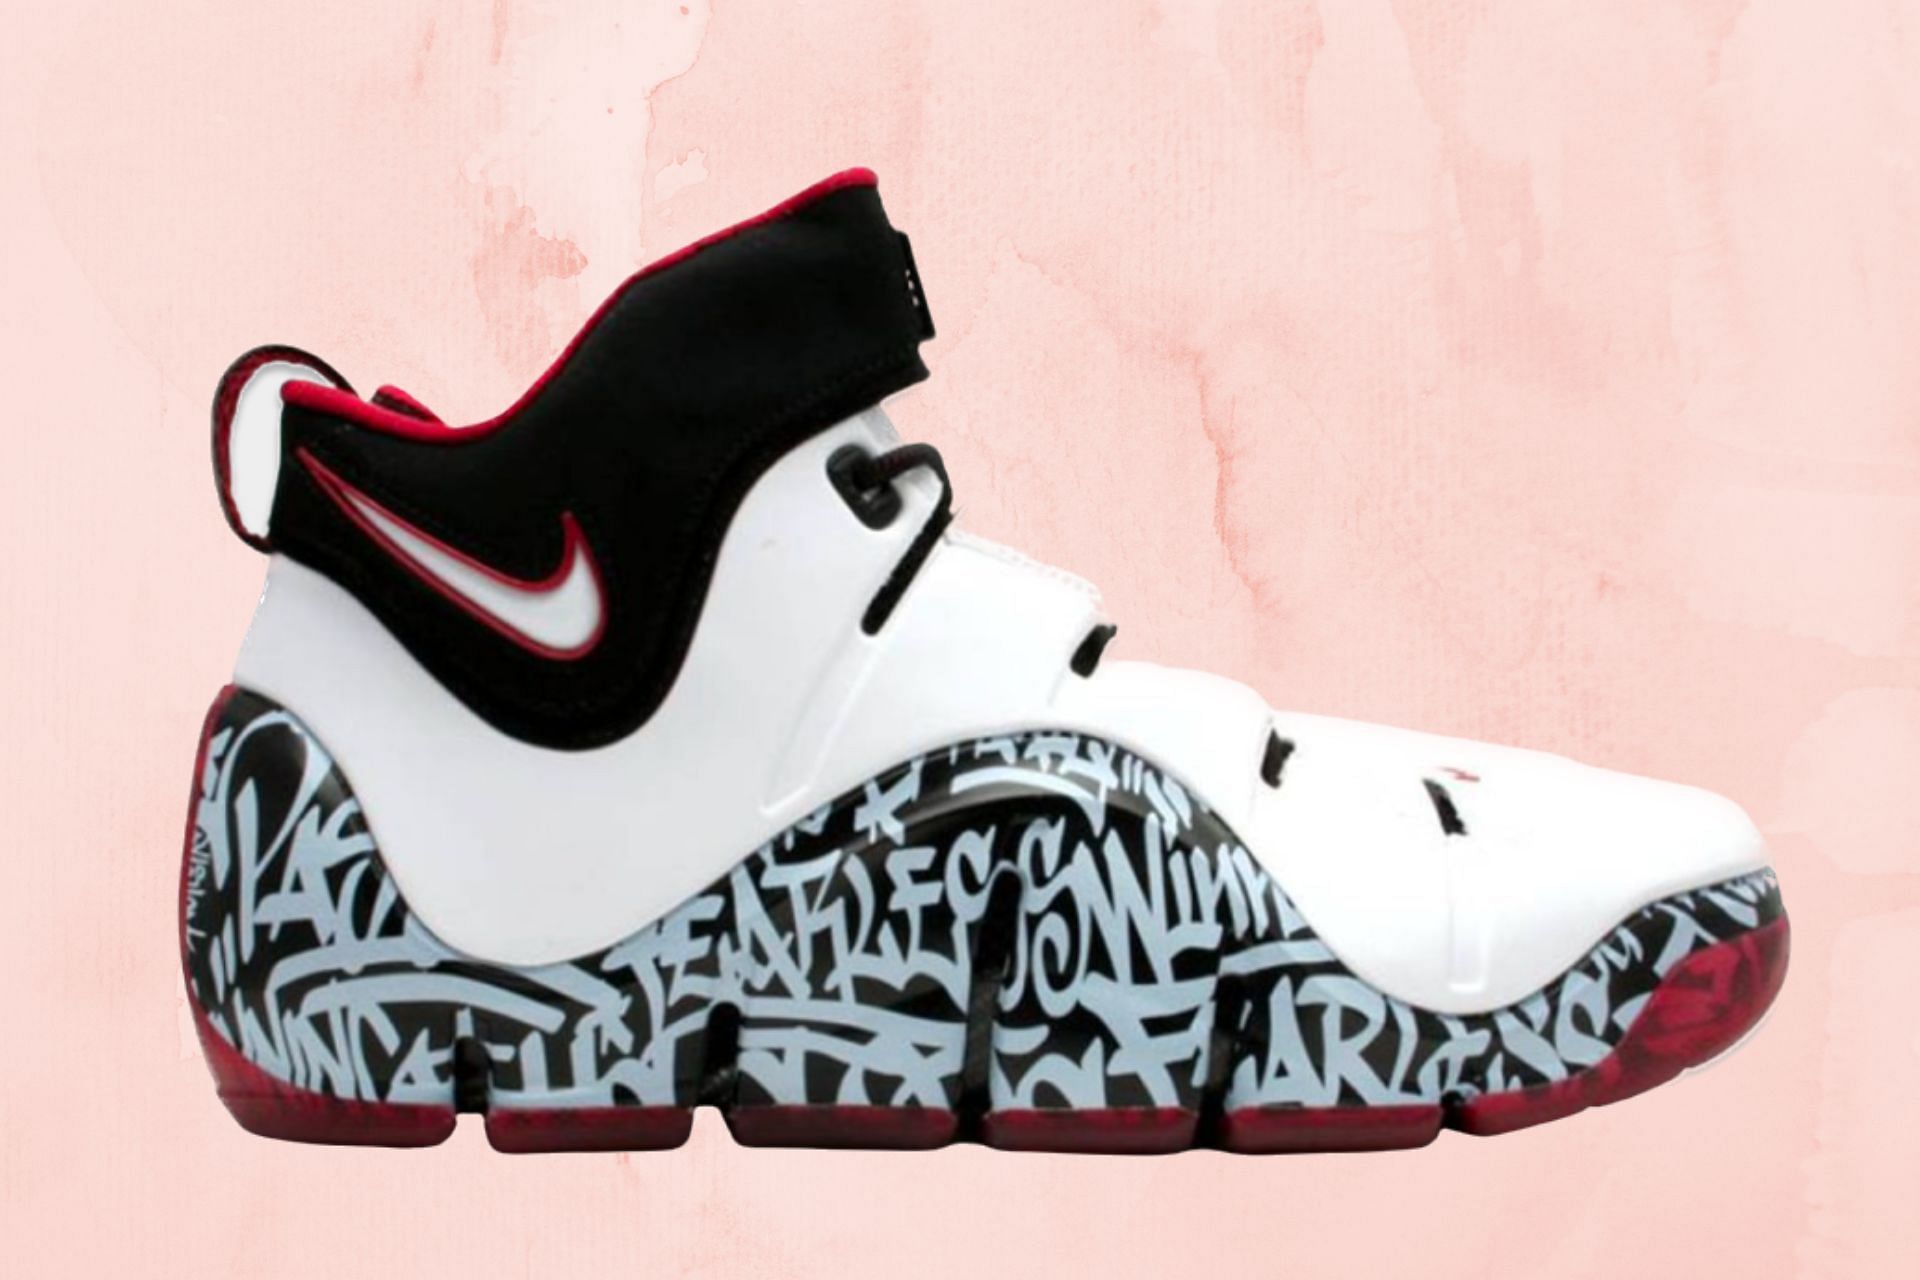 LeBron James Nike LeBron 4 "Graffiti" shoes Where to buy, price, and